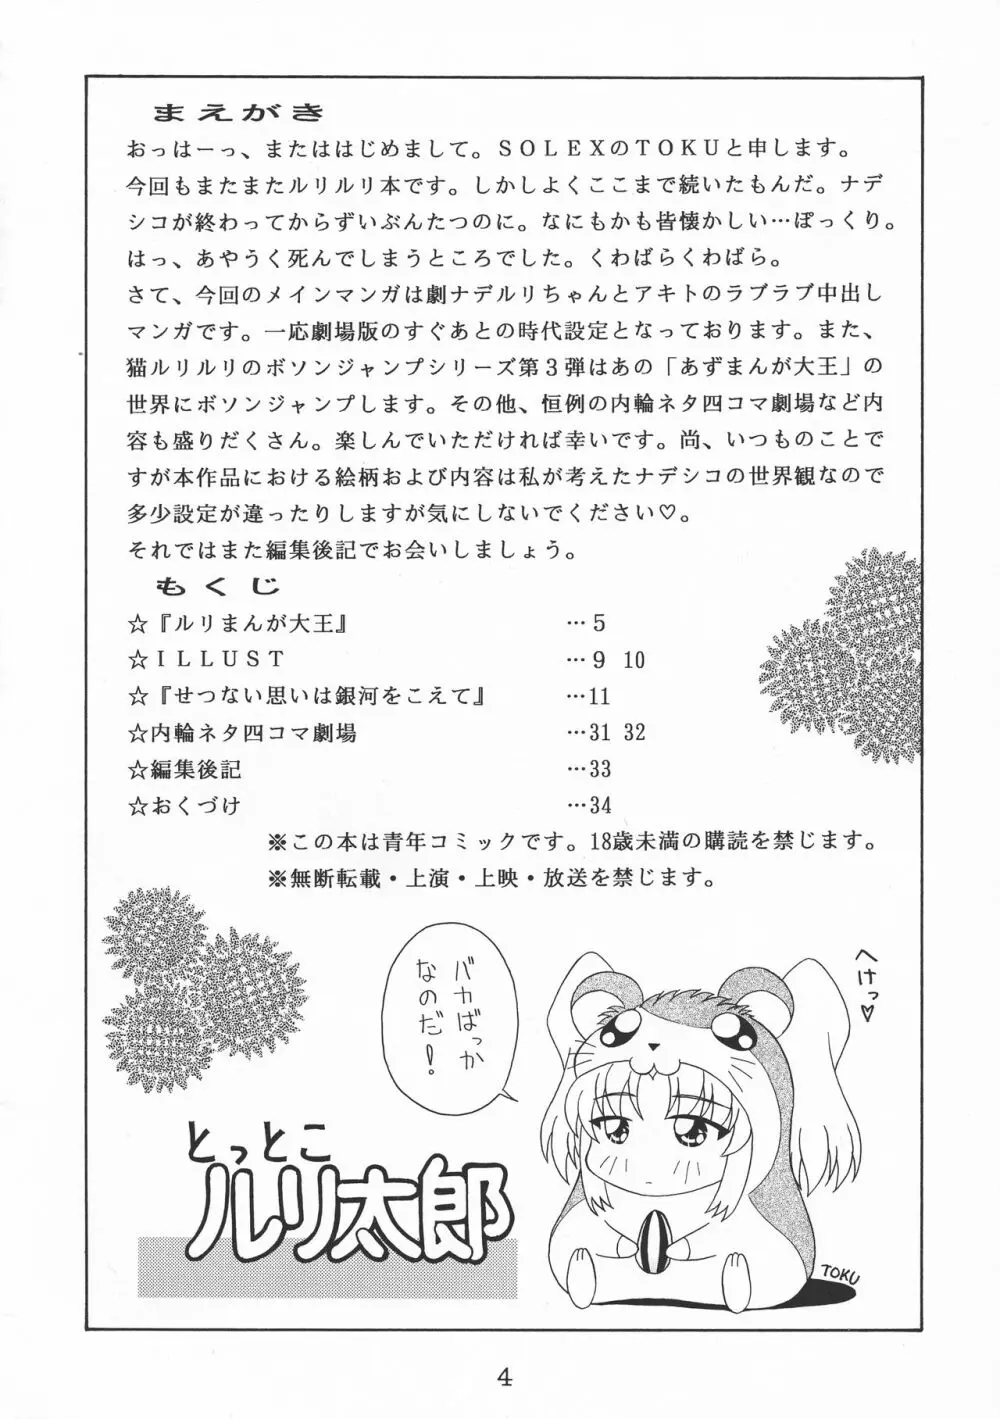 TOKUTEI 9 - page4